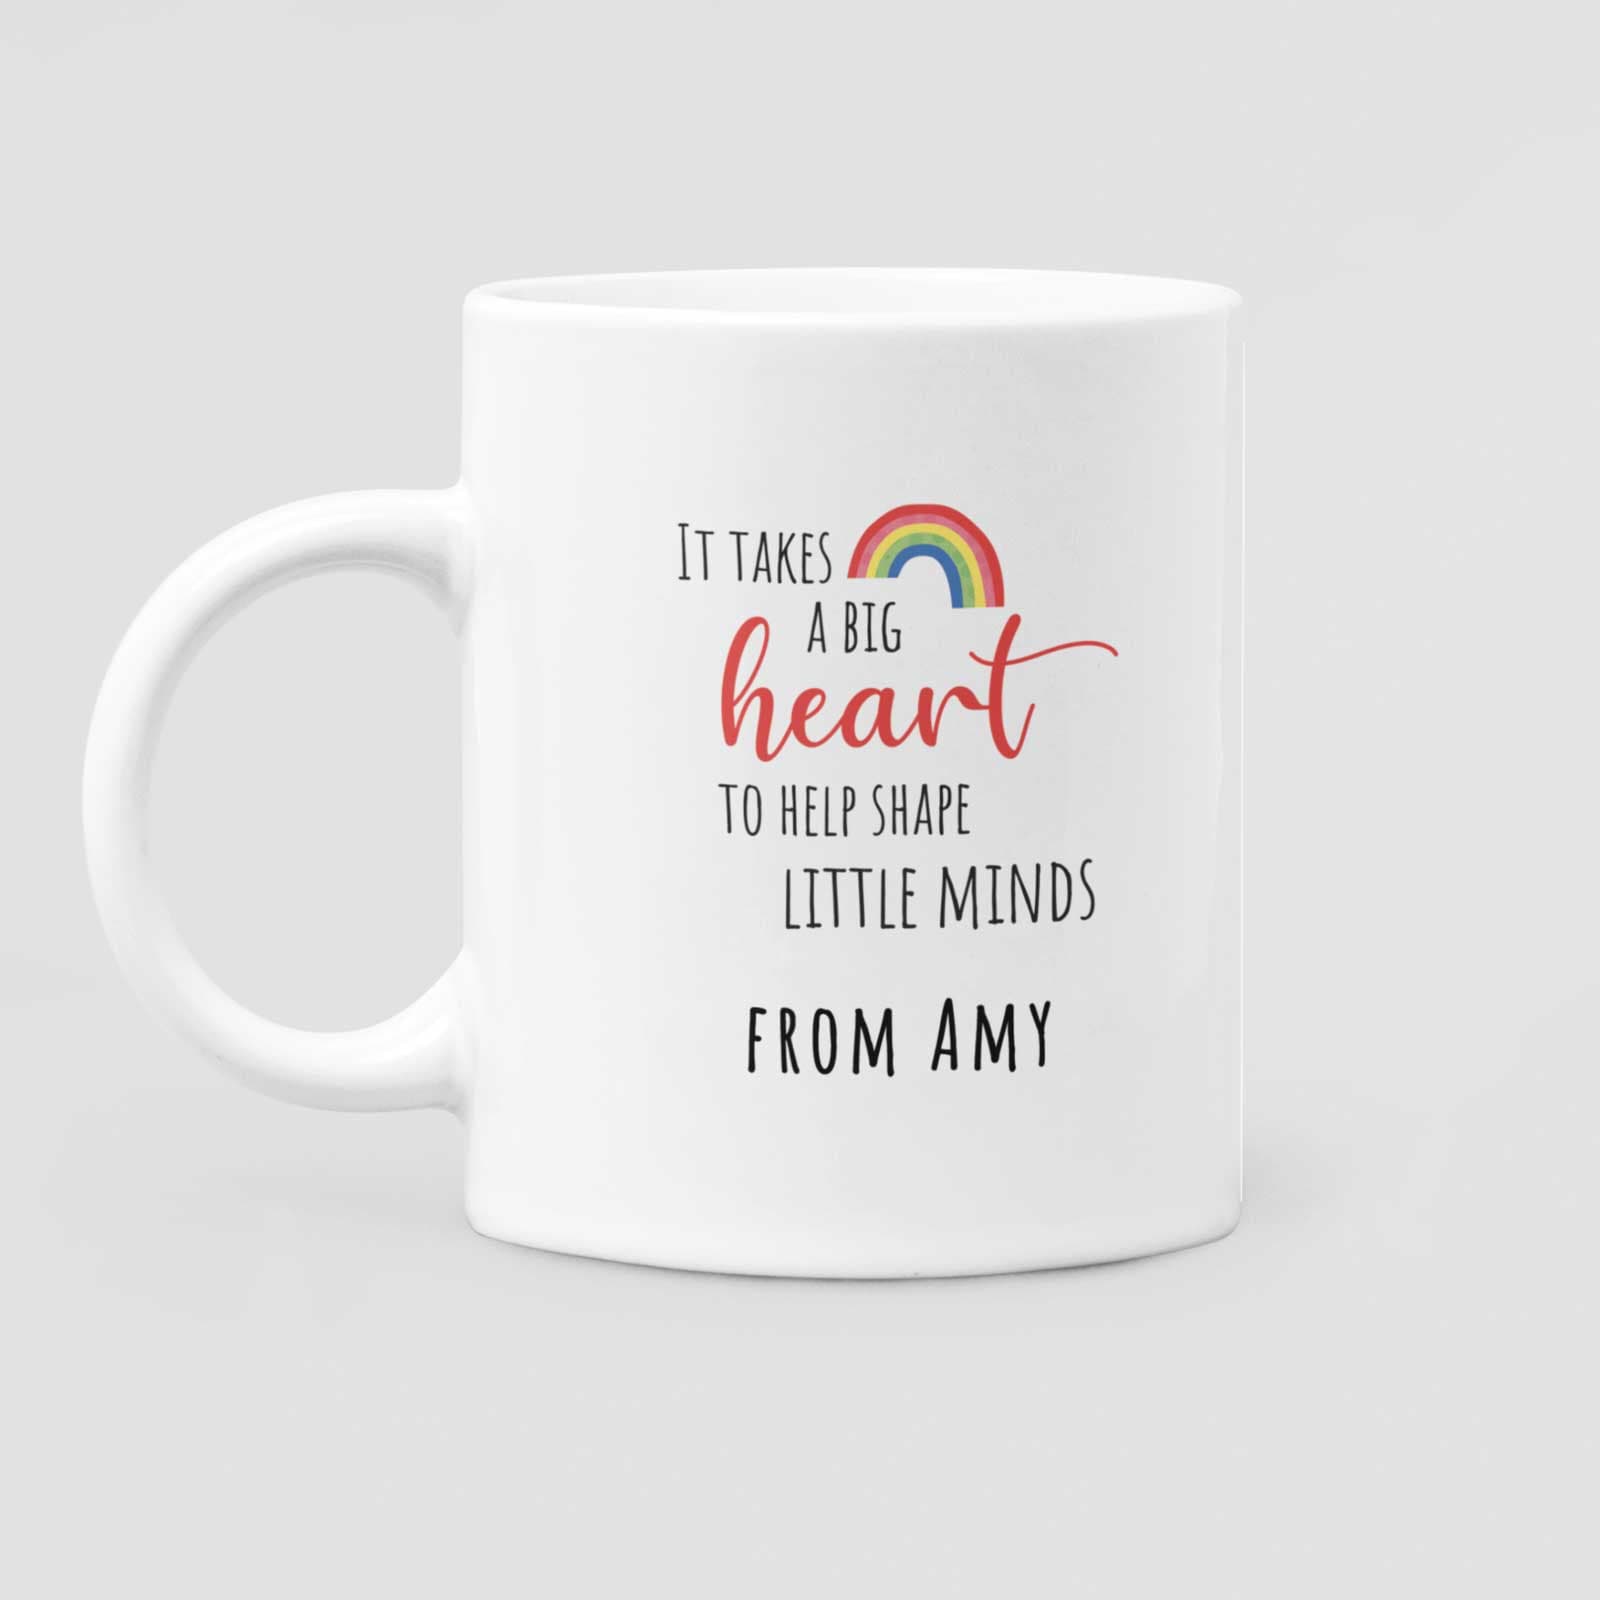 Thank You Teacher Rainbow Personalised Mug